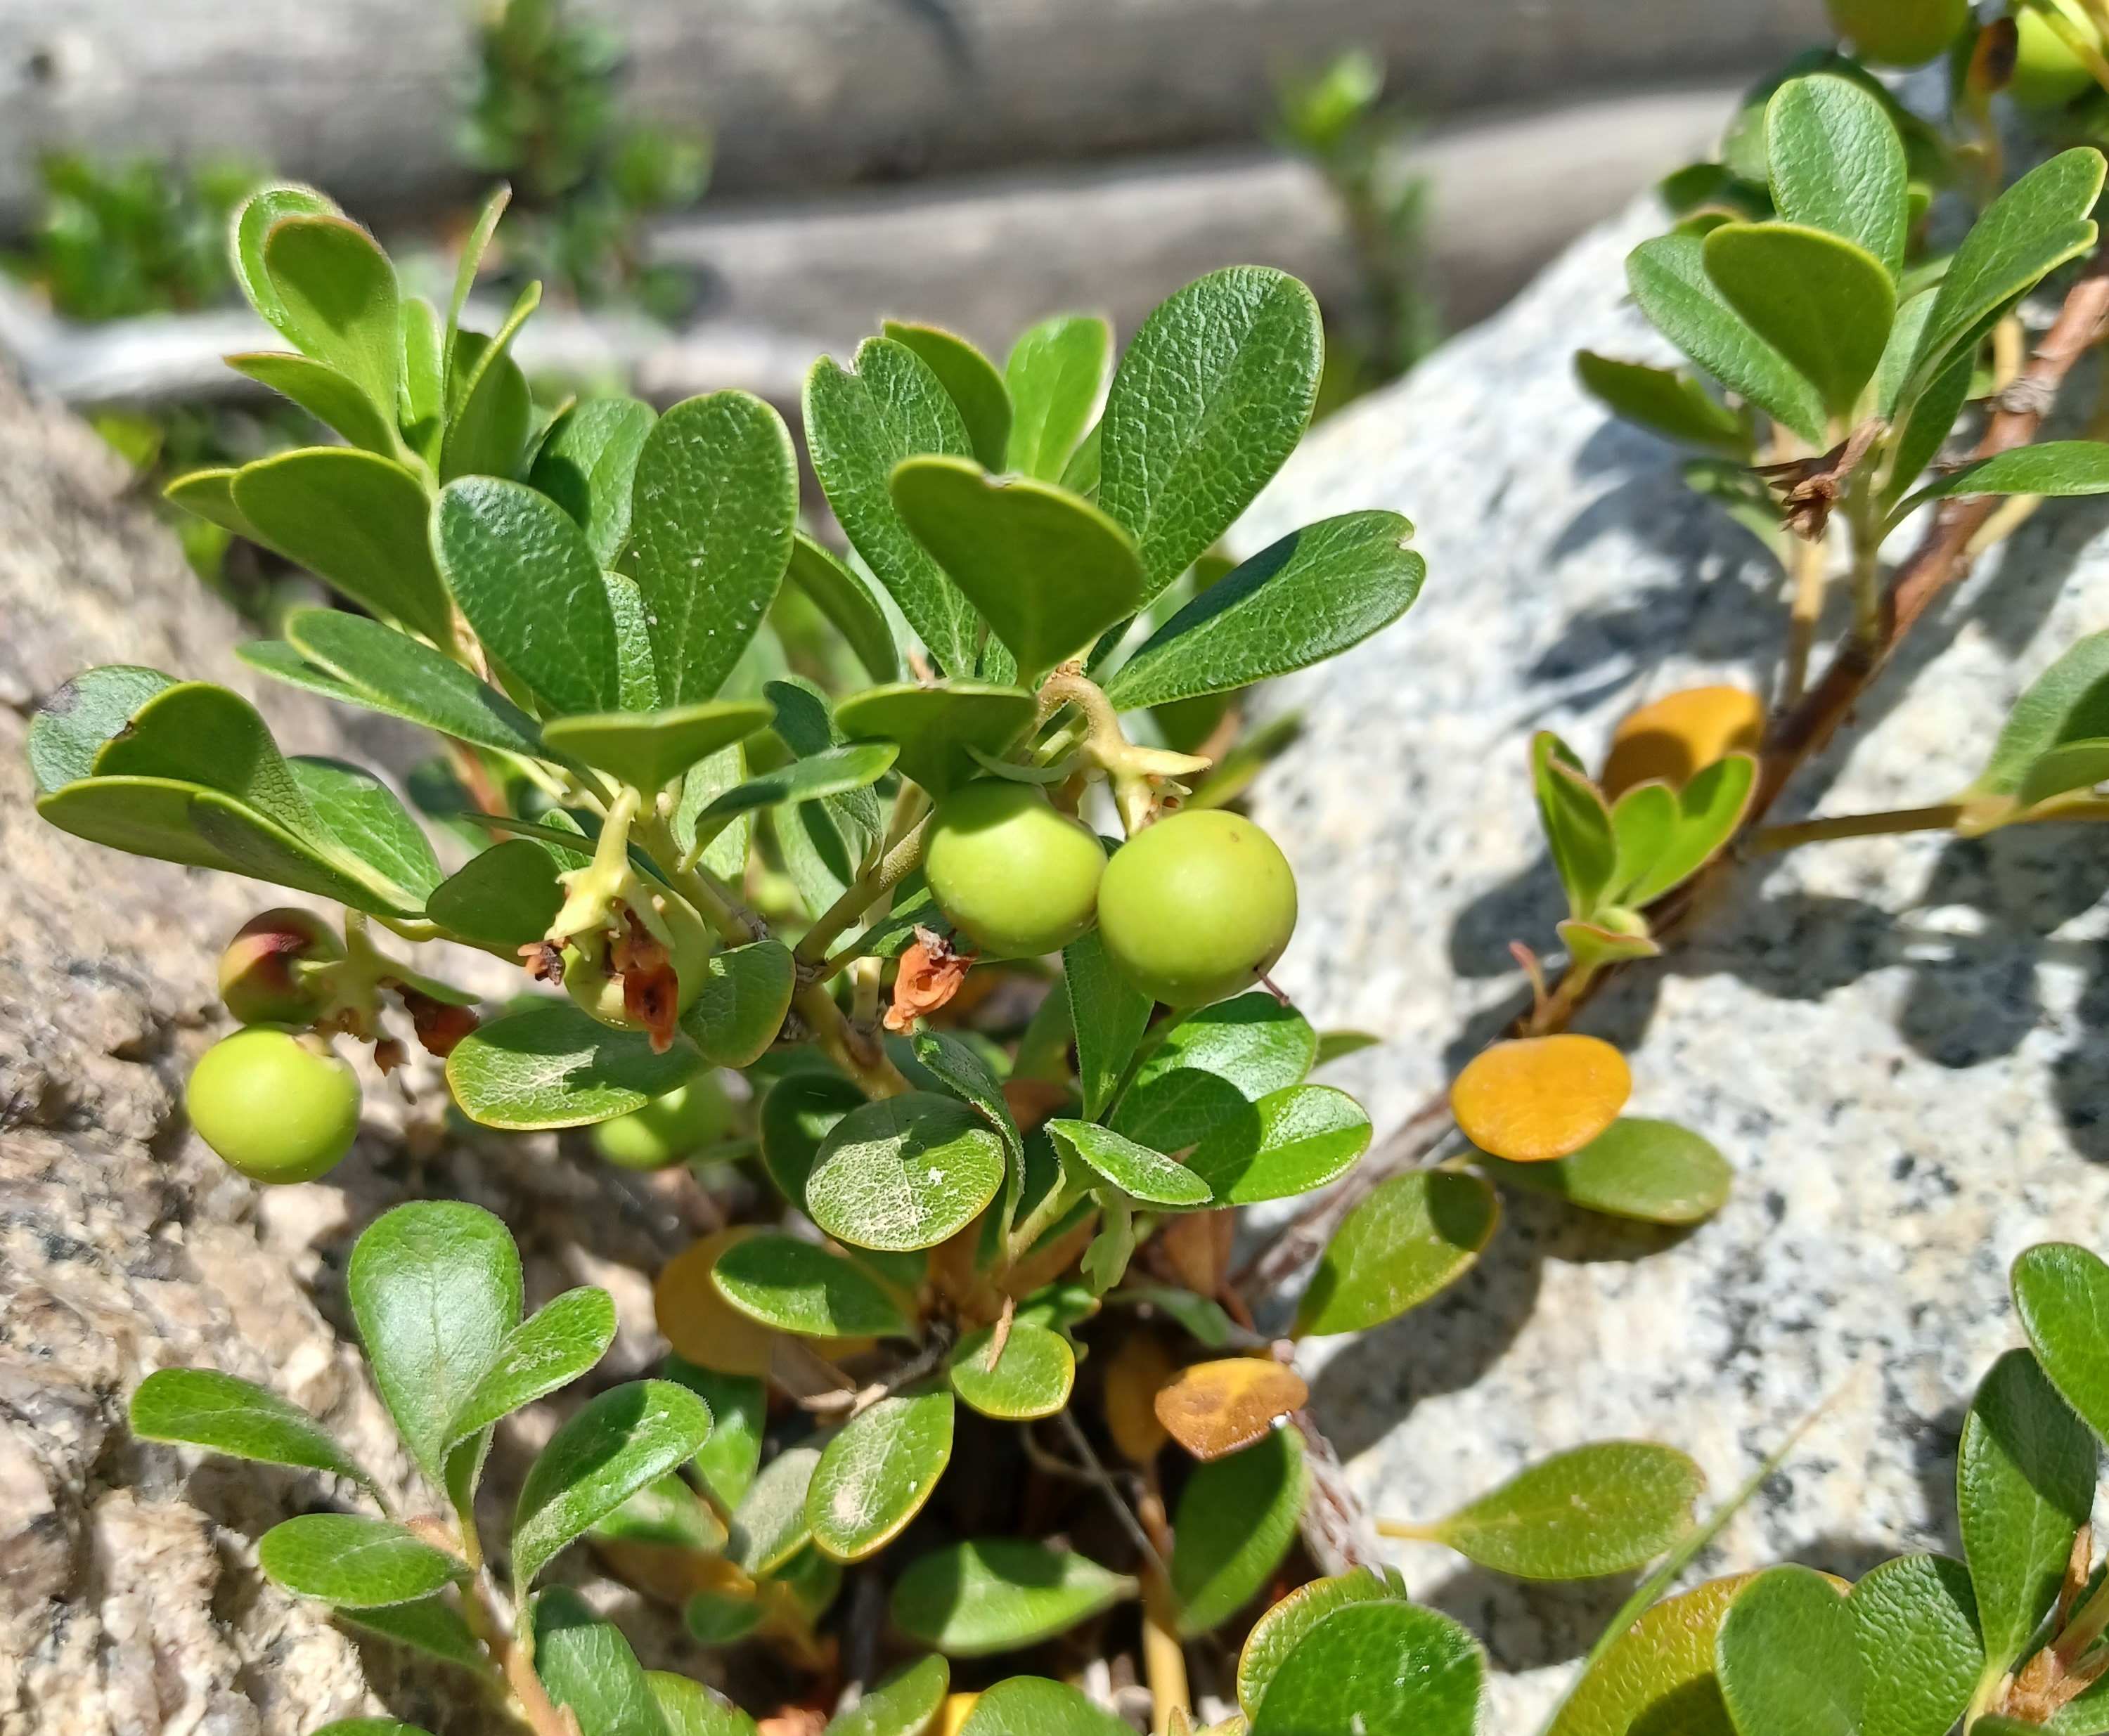 Arctostaphylos uva-ursi with immature (green) fruits.